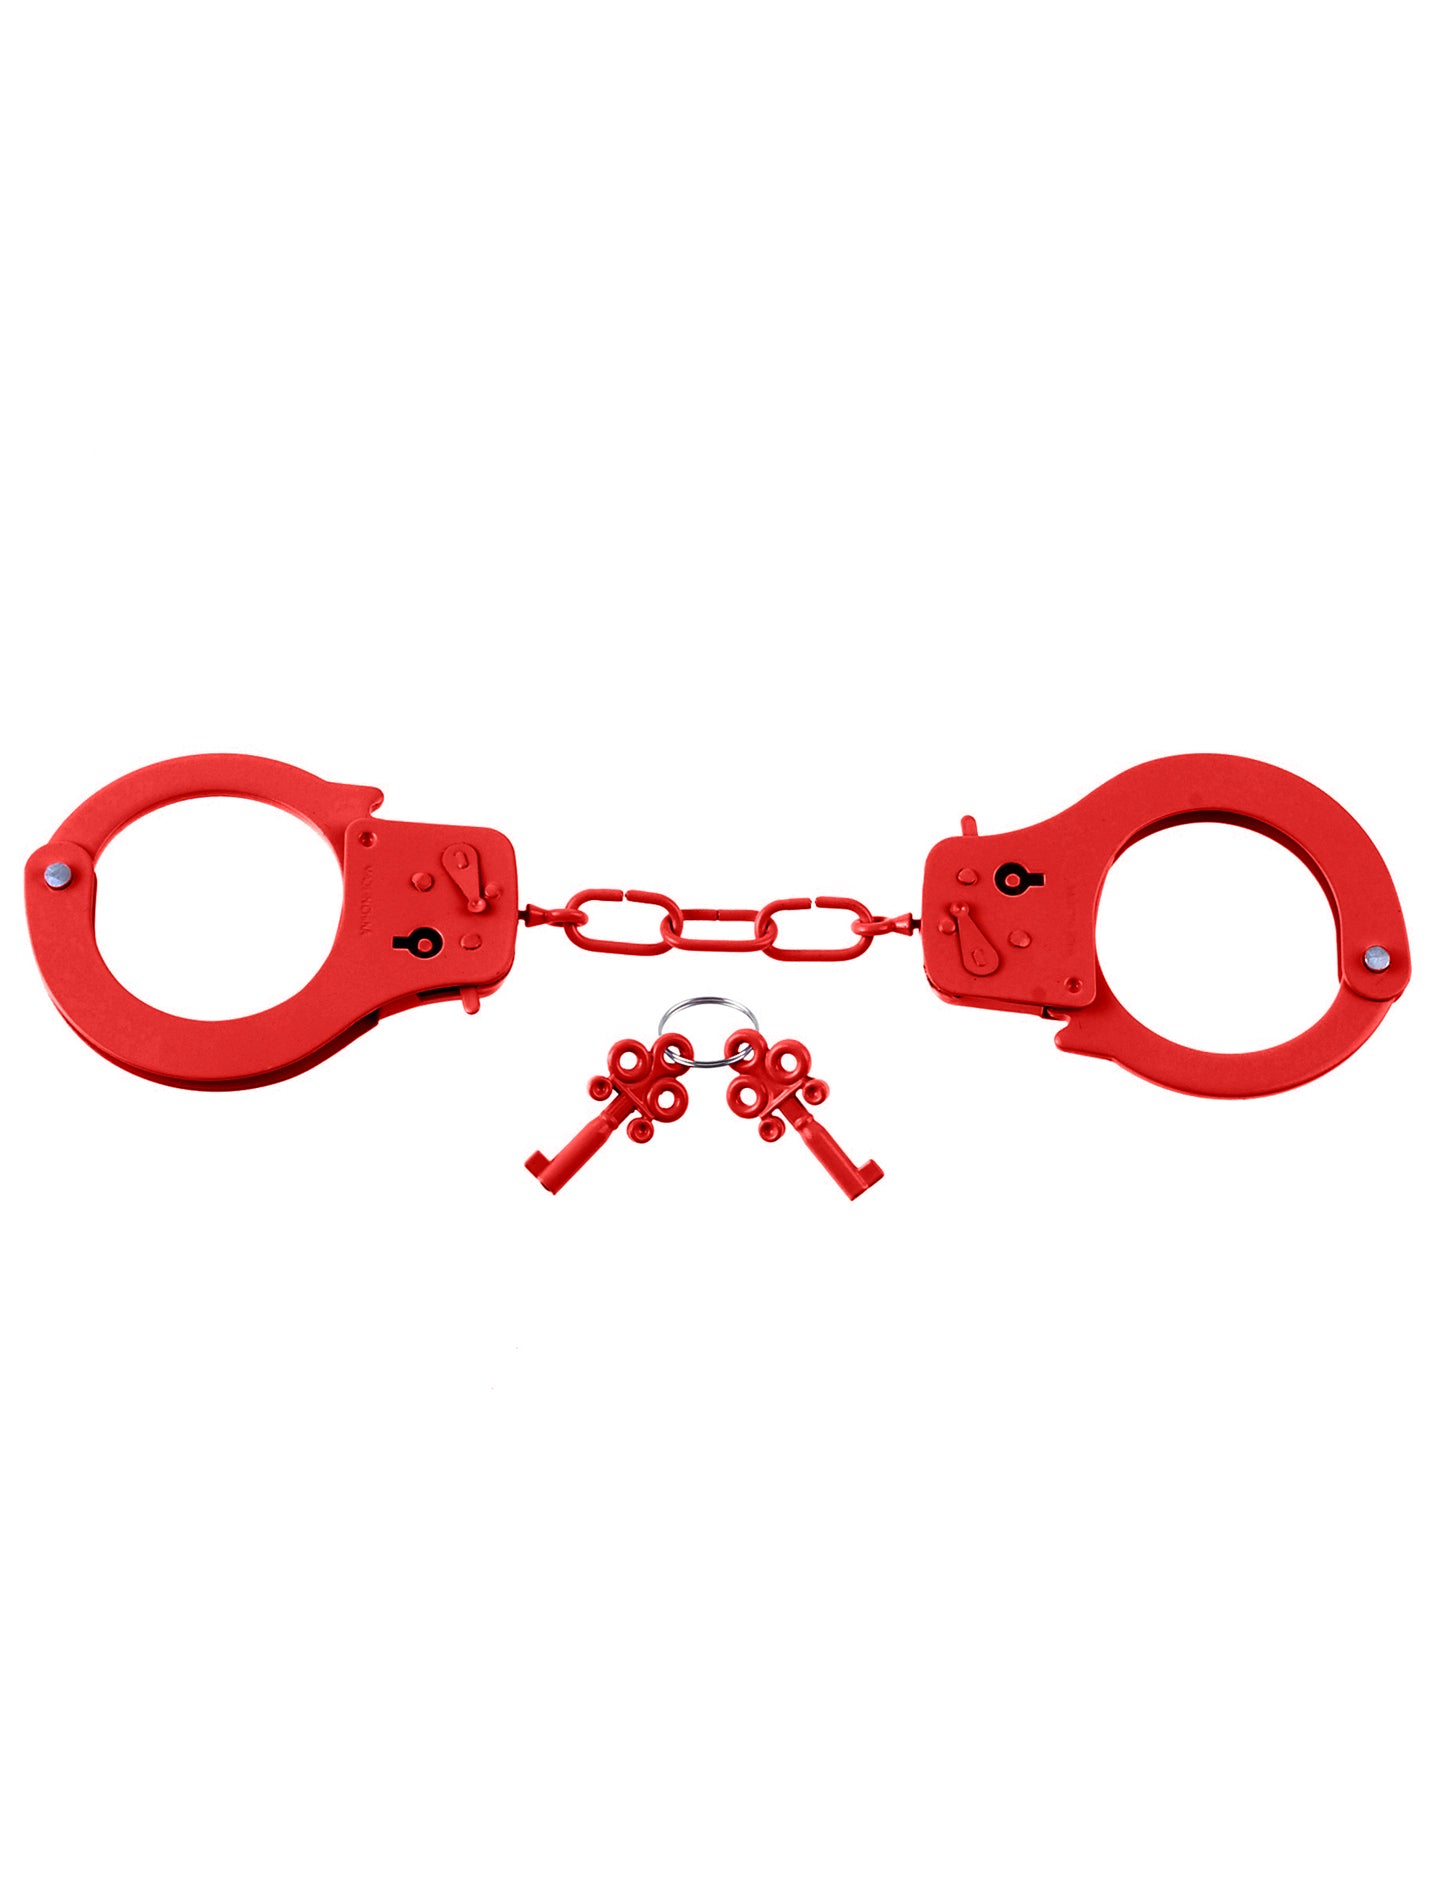 Metal Handcuffs - Red